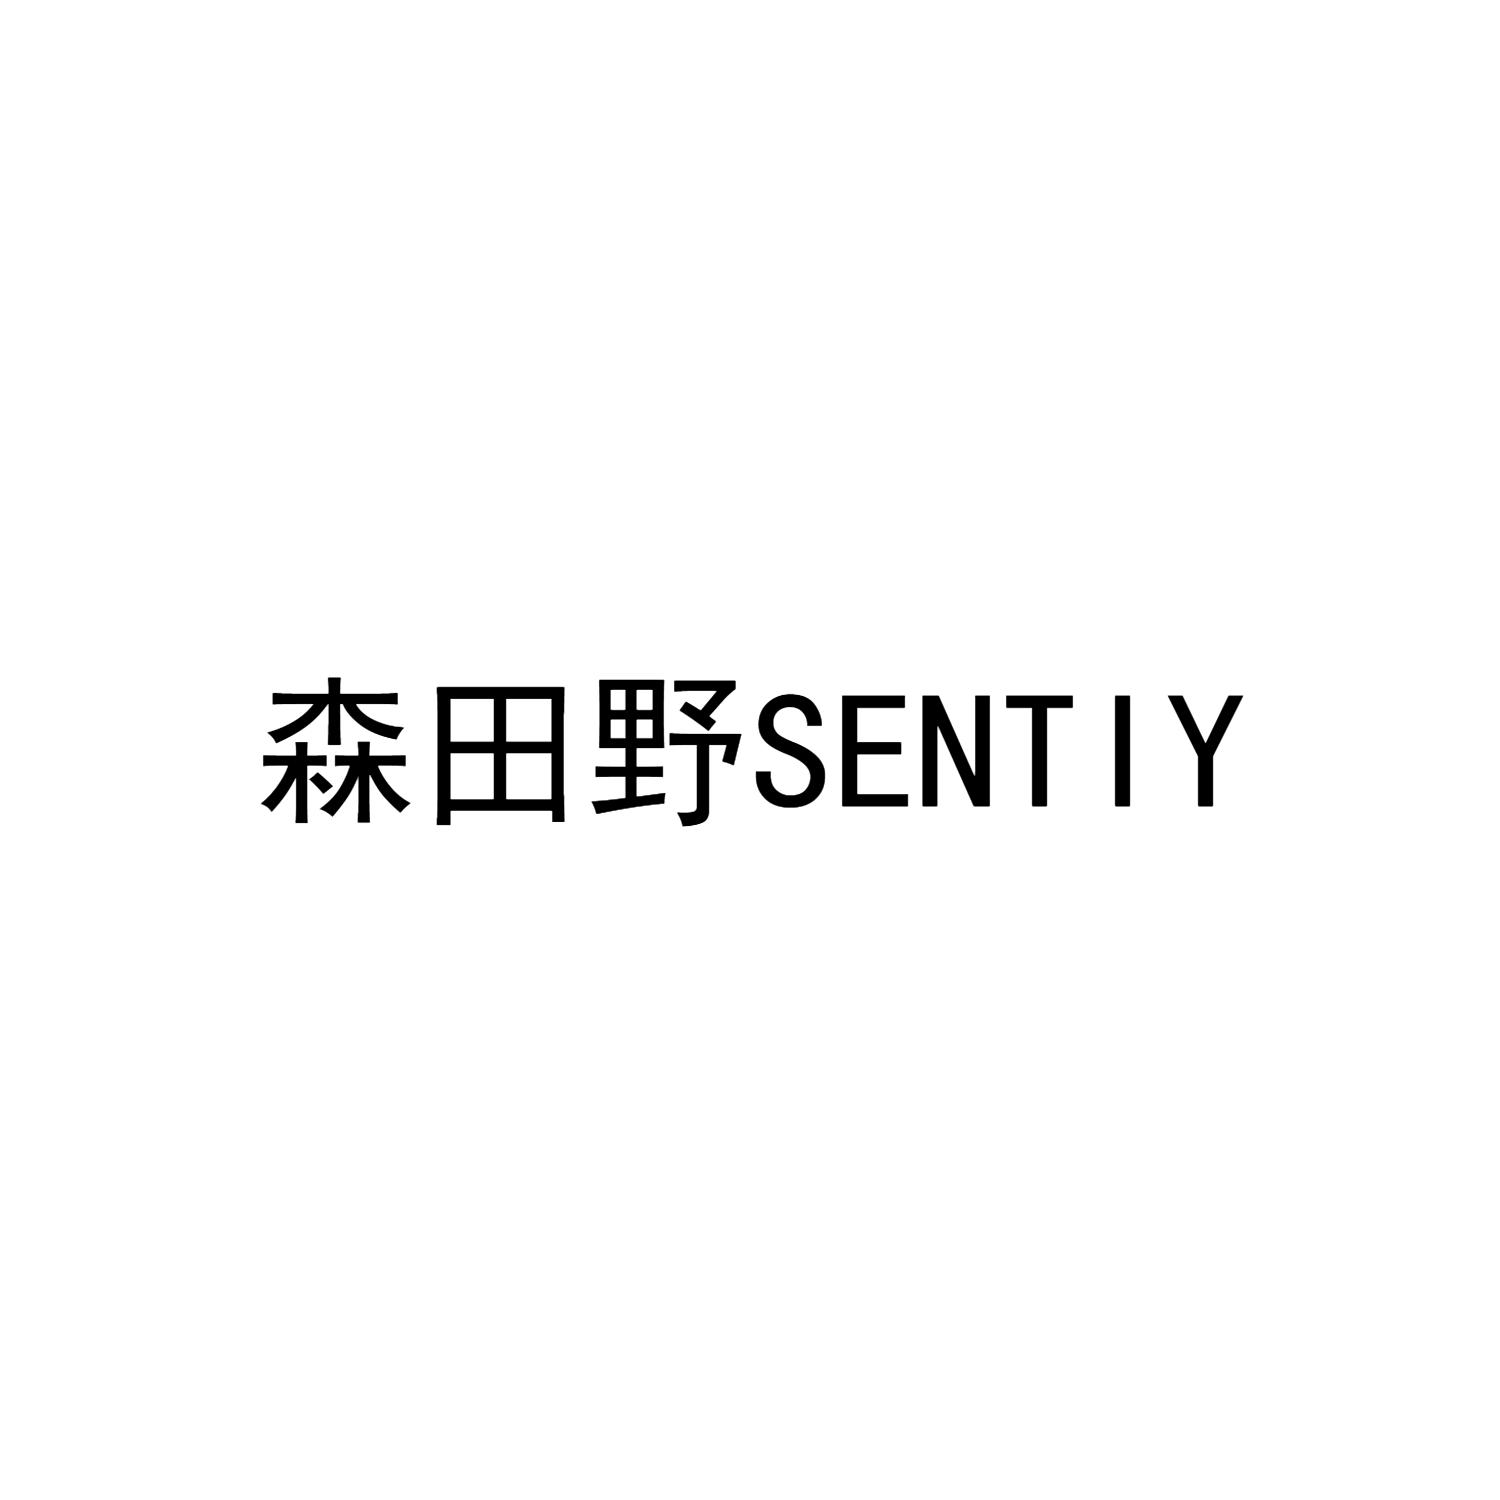 森田野 SENTIY商标转让